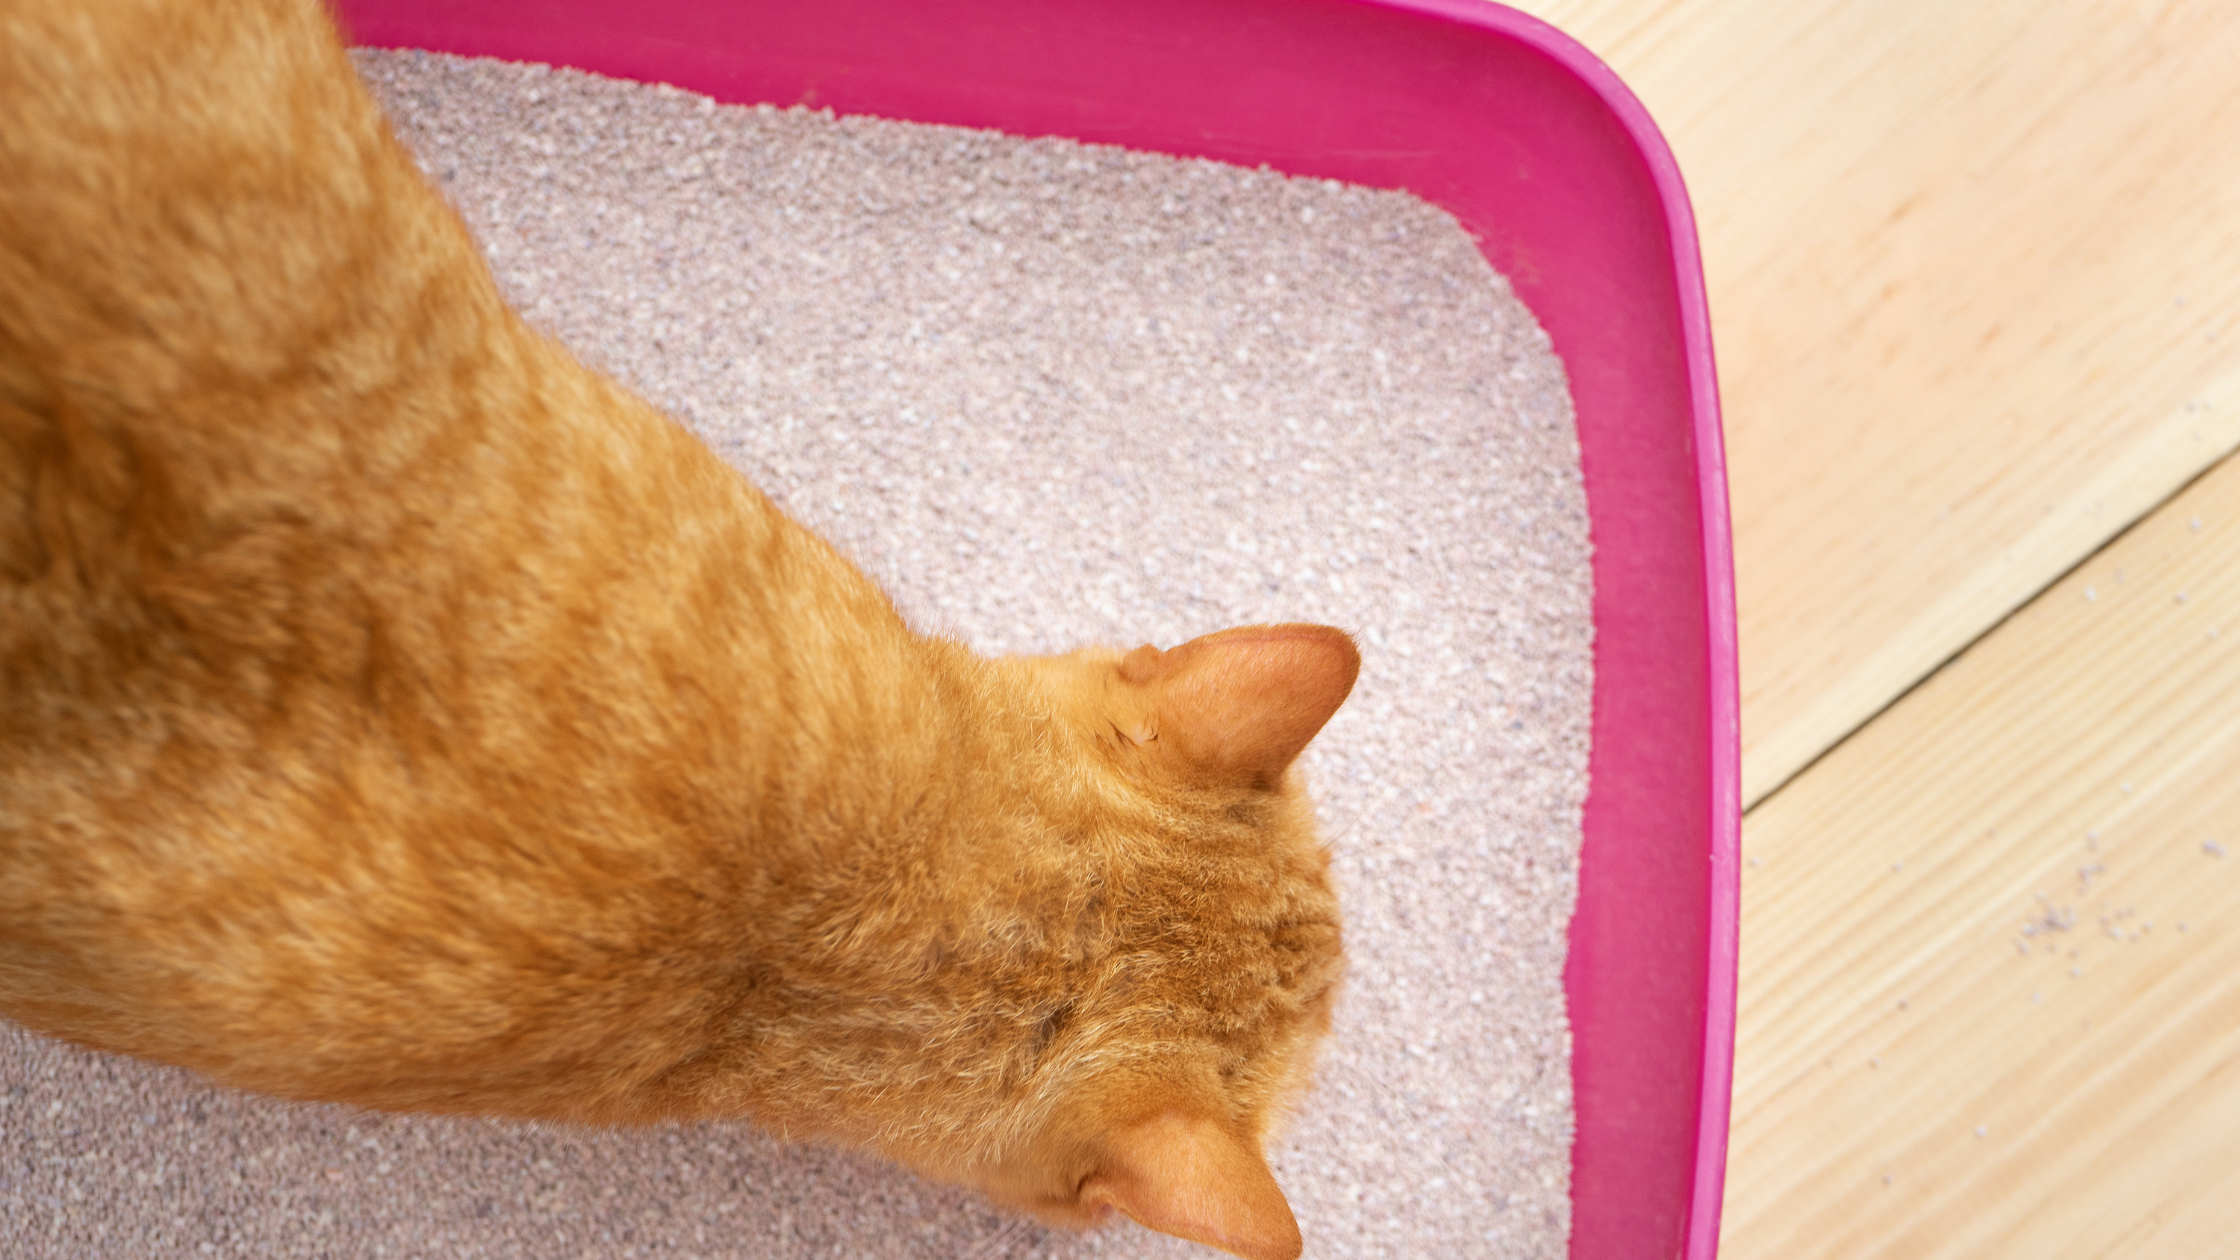 a ginger cat inside a pink litter box taken from above